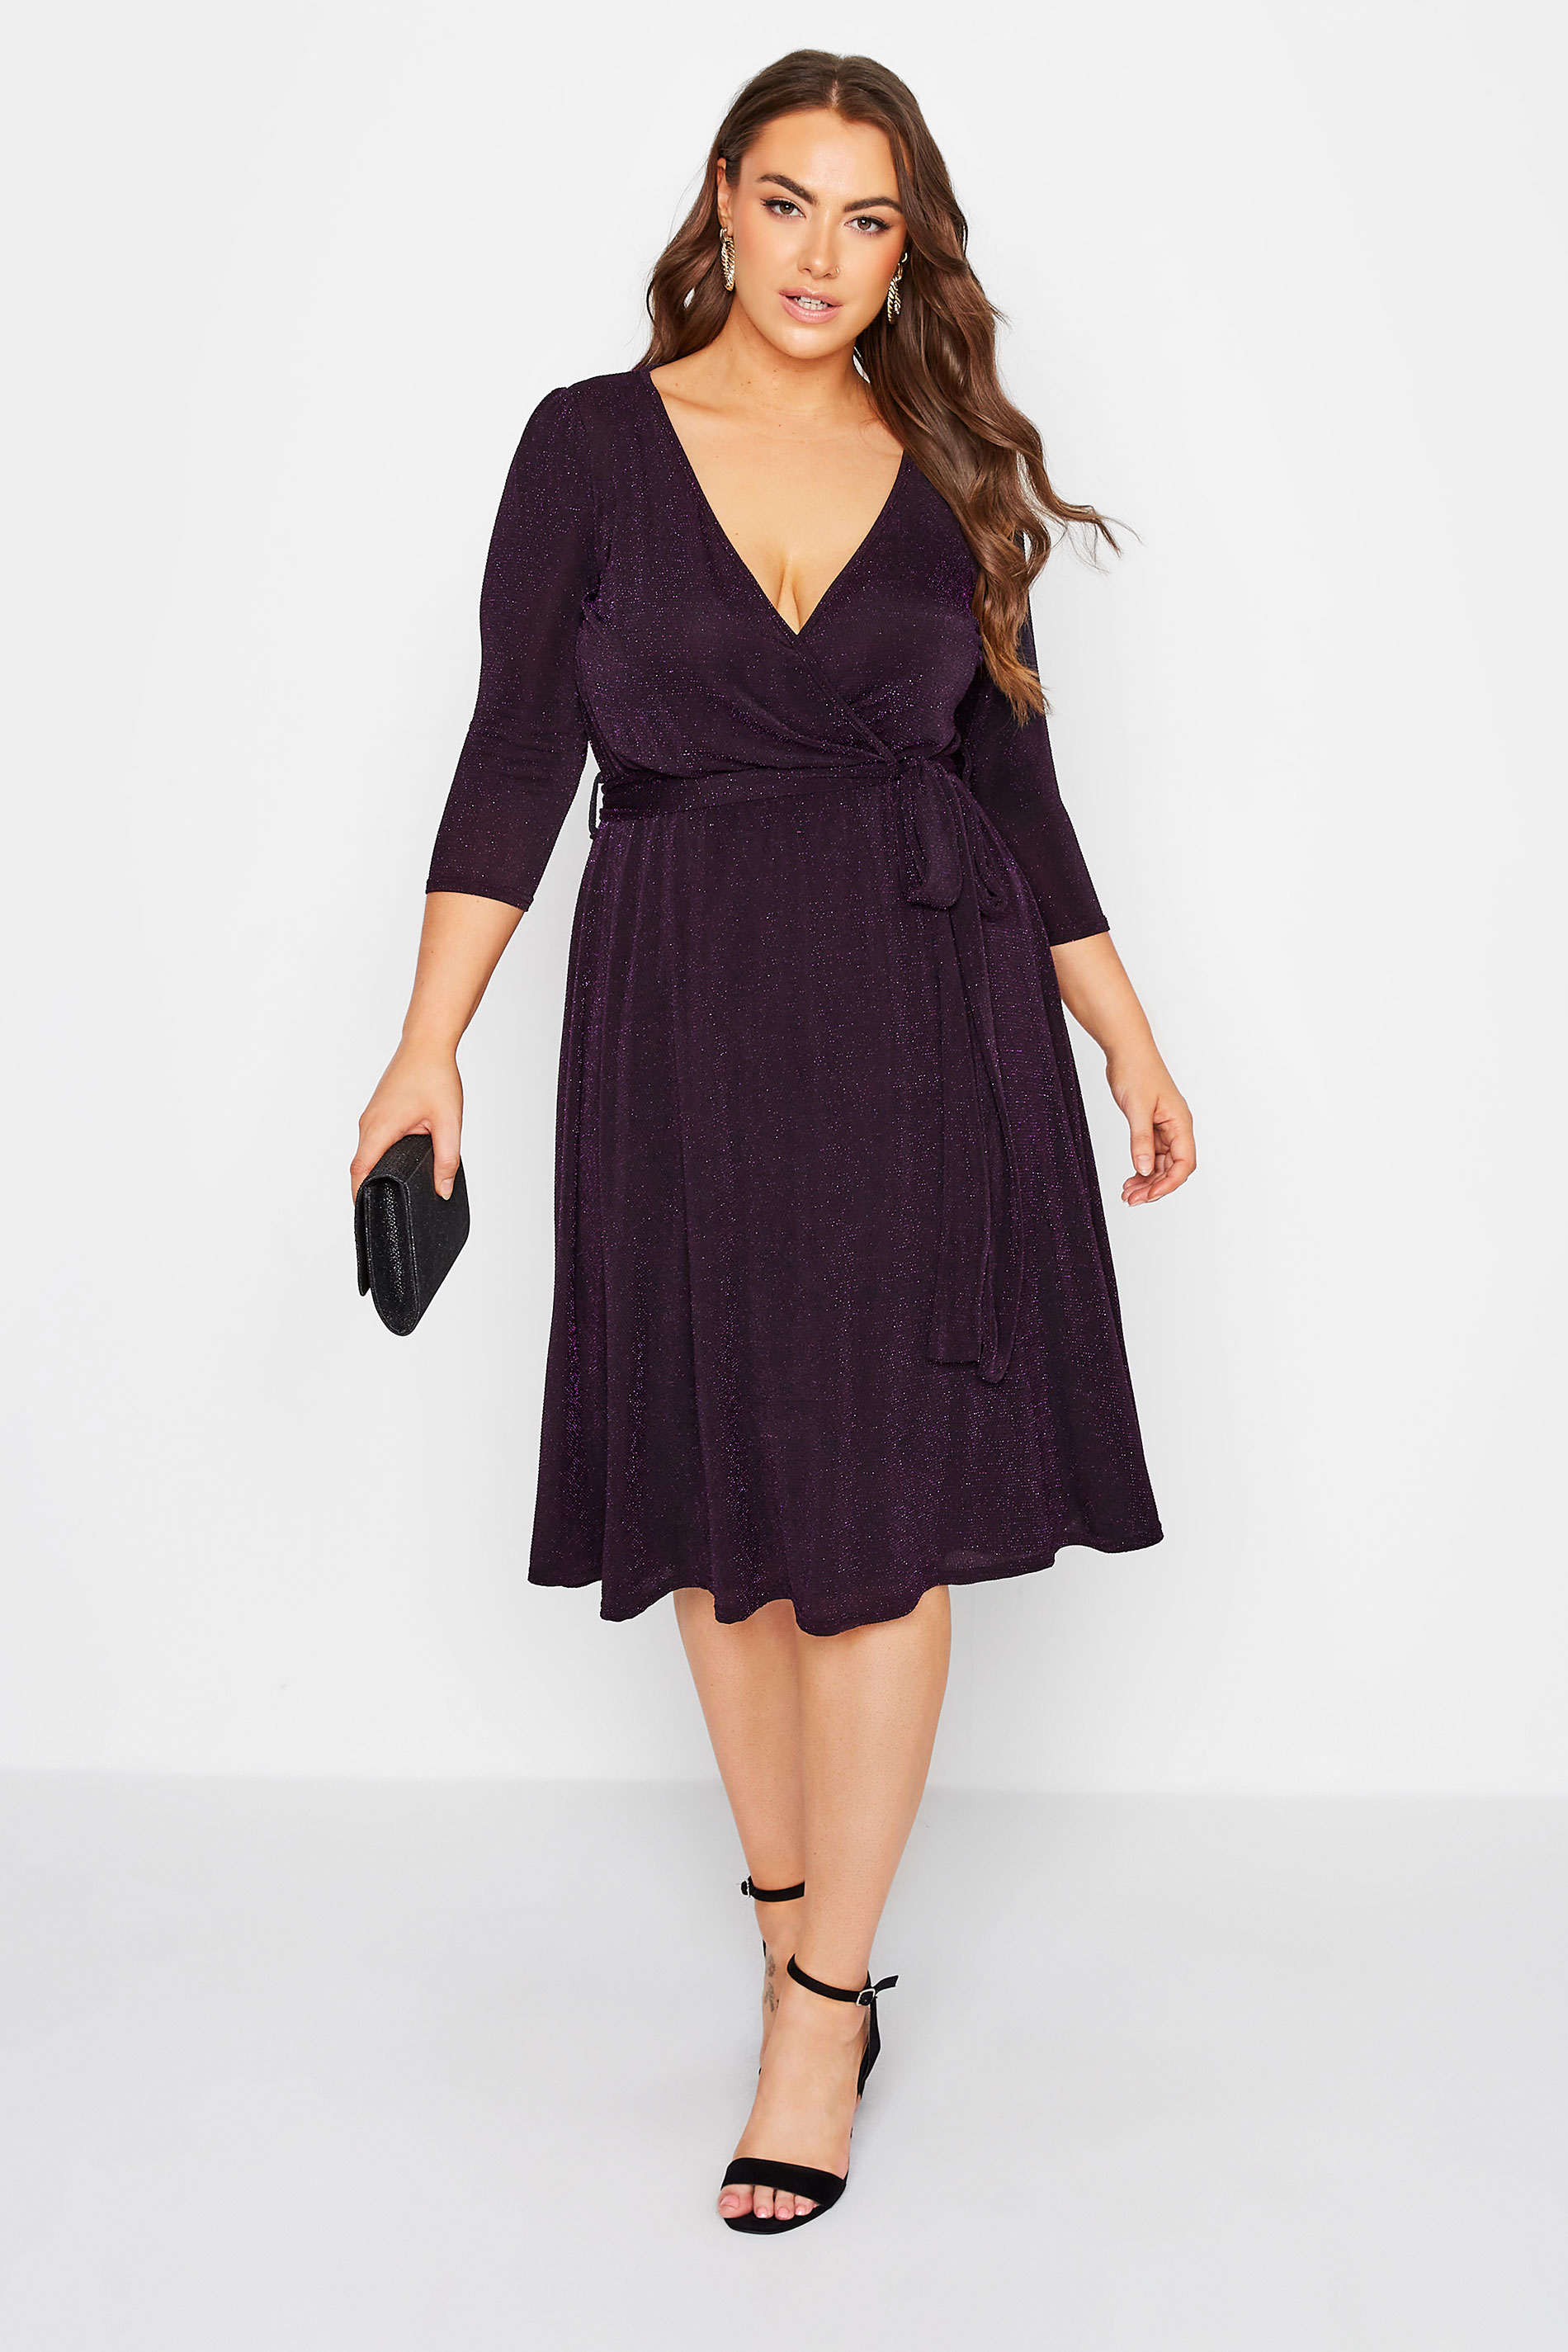 YOURS LONDON Curve Black & Purple Glitter Wrap Dress 1